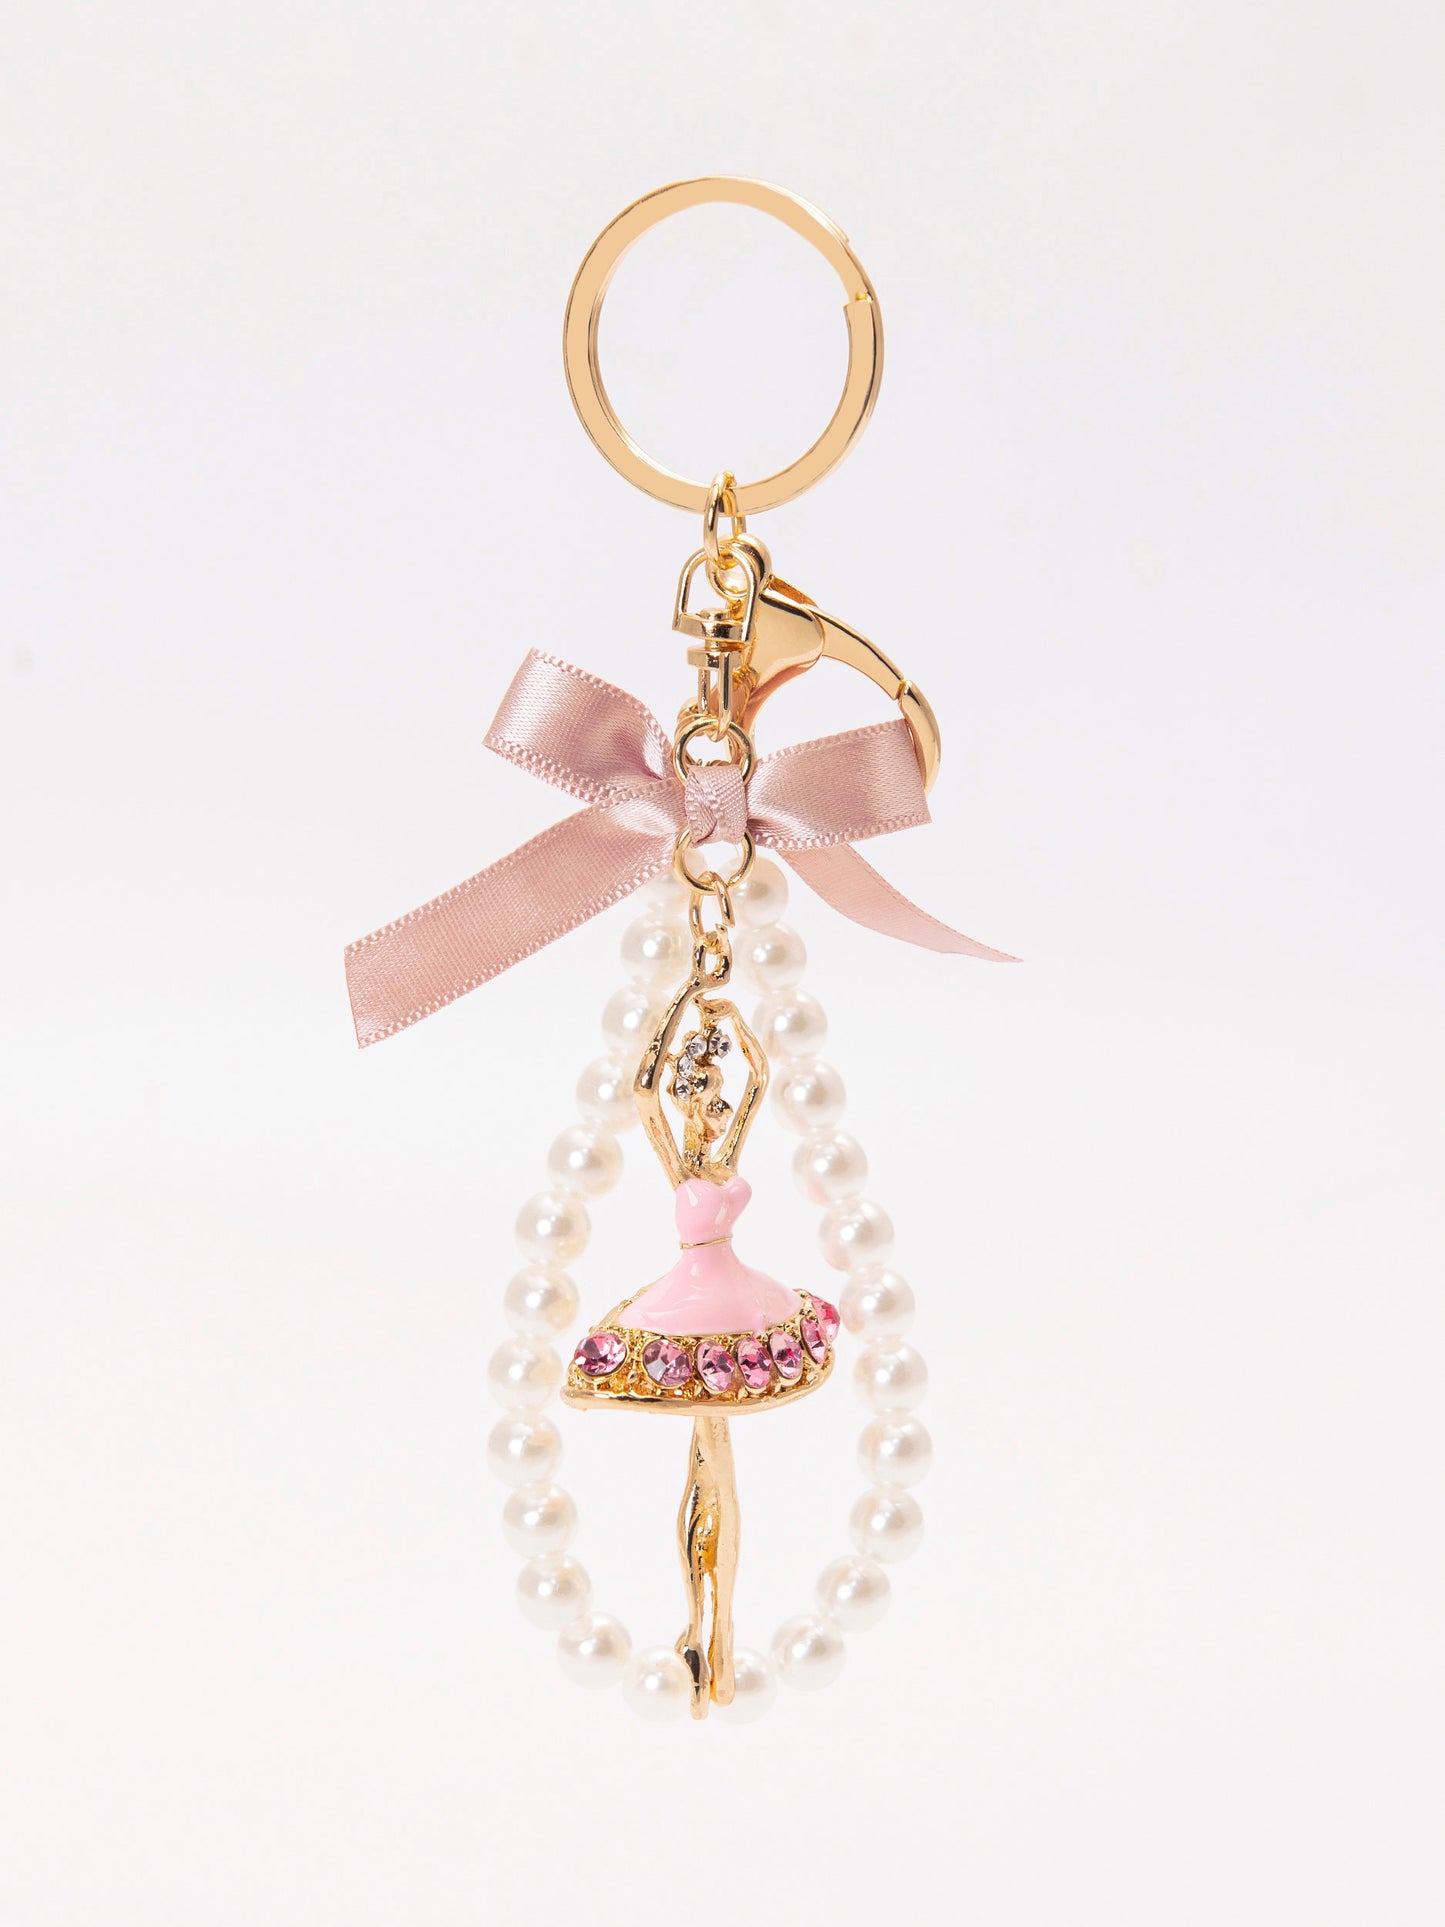 Bejeweled Ballerina Keychain